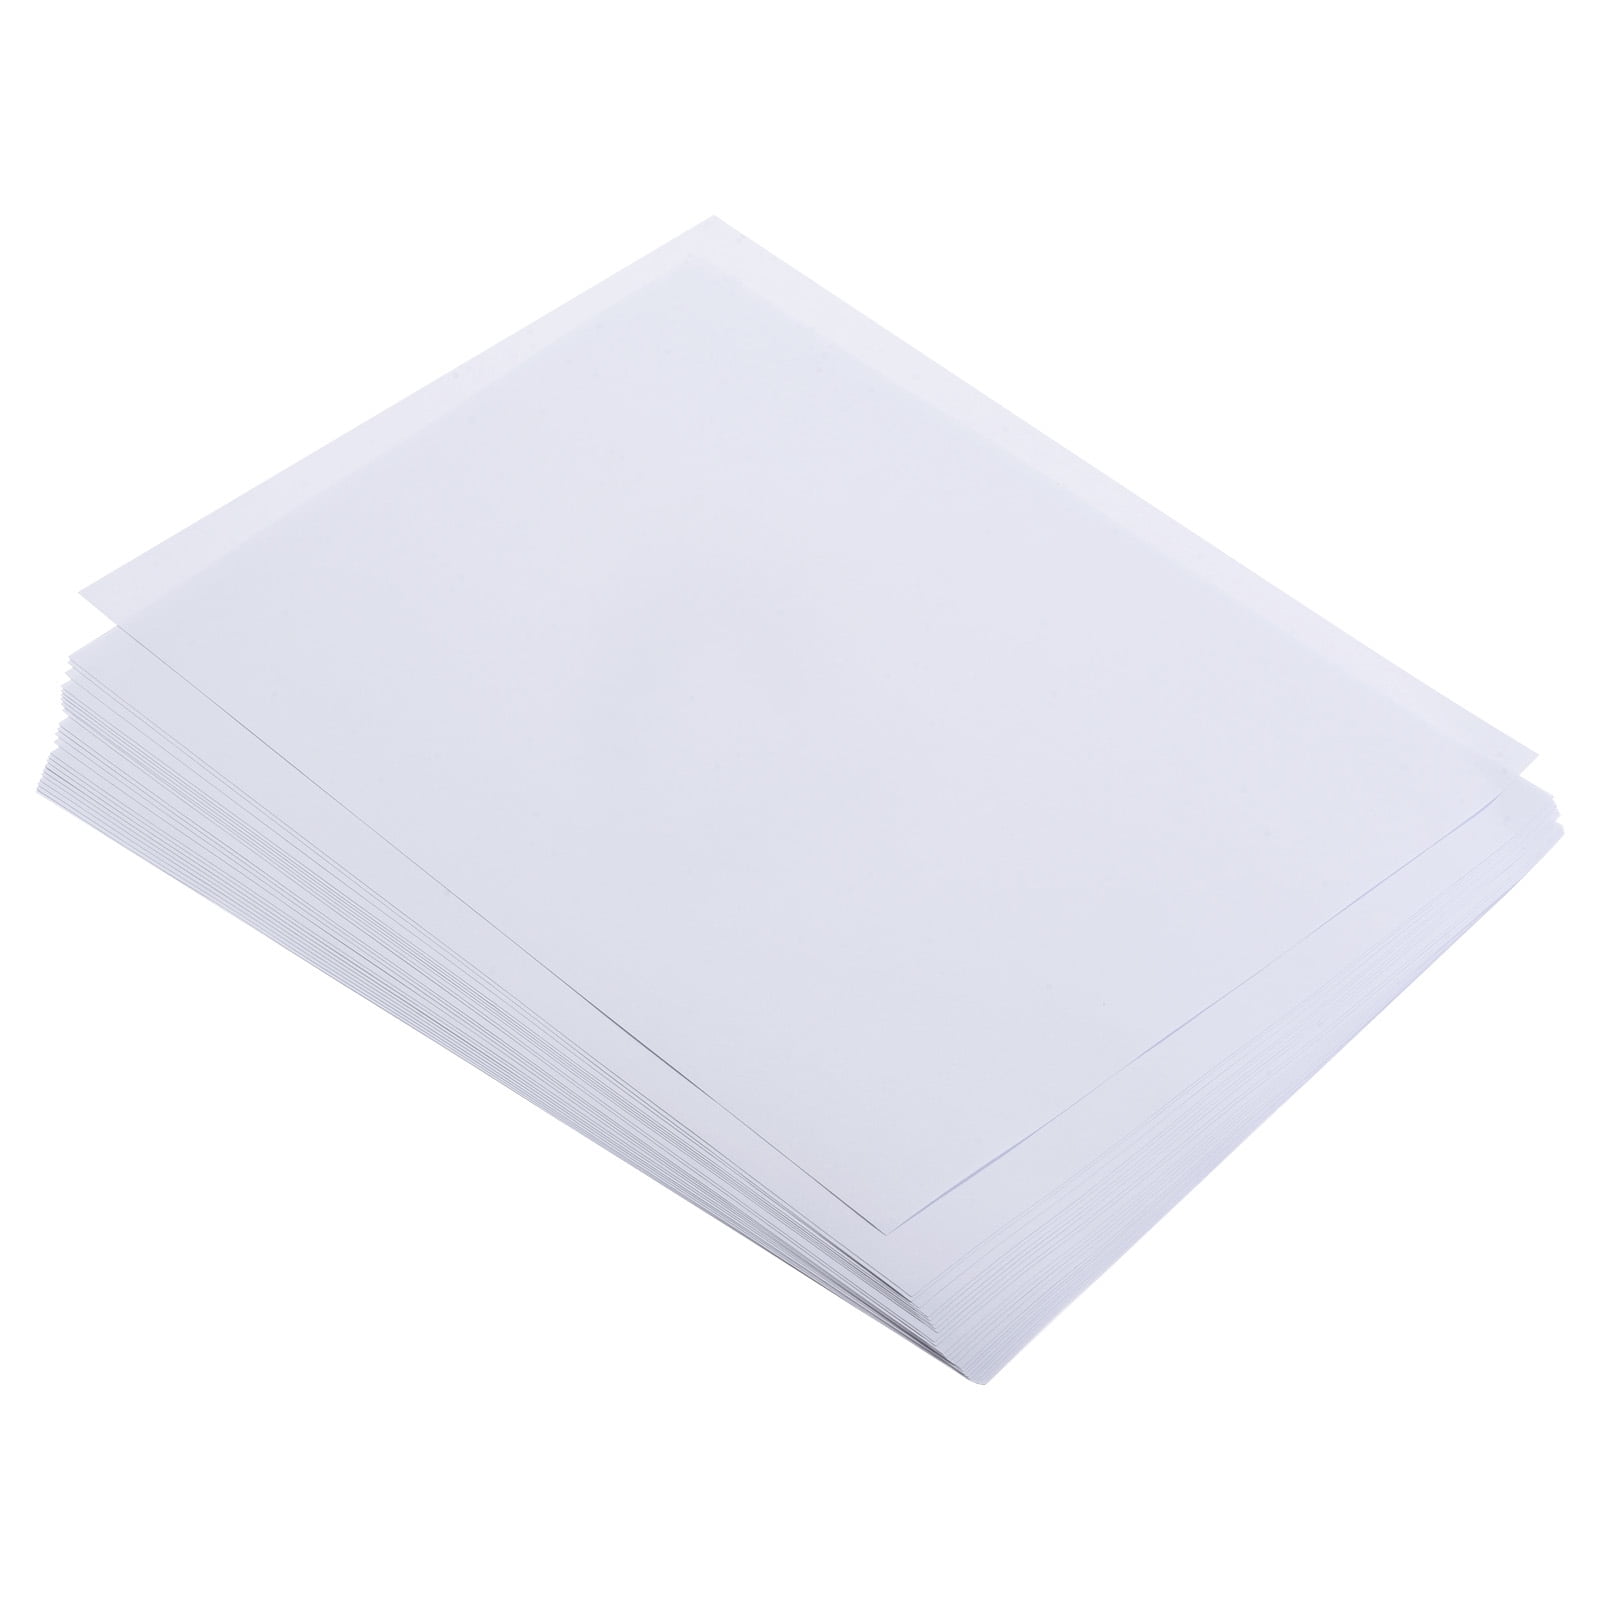 EXACT DIGITAL Hyper White Color Copy Paper- 17x11 32lb Writing (120g) - 150